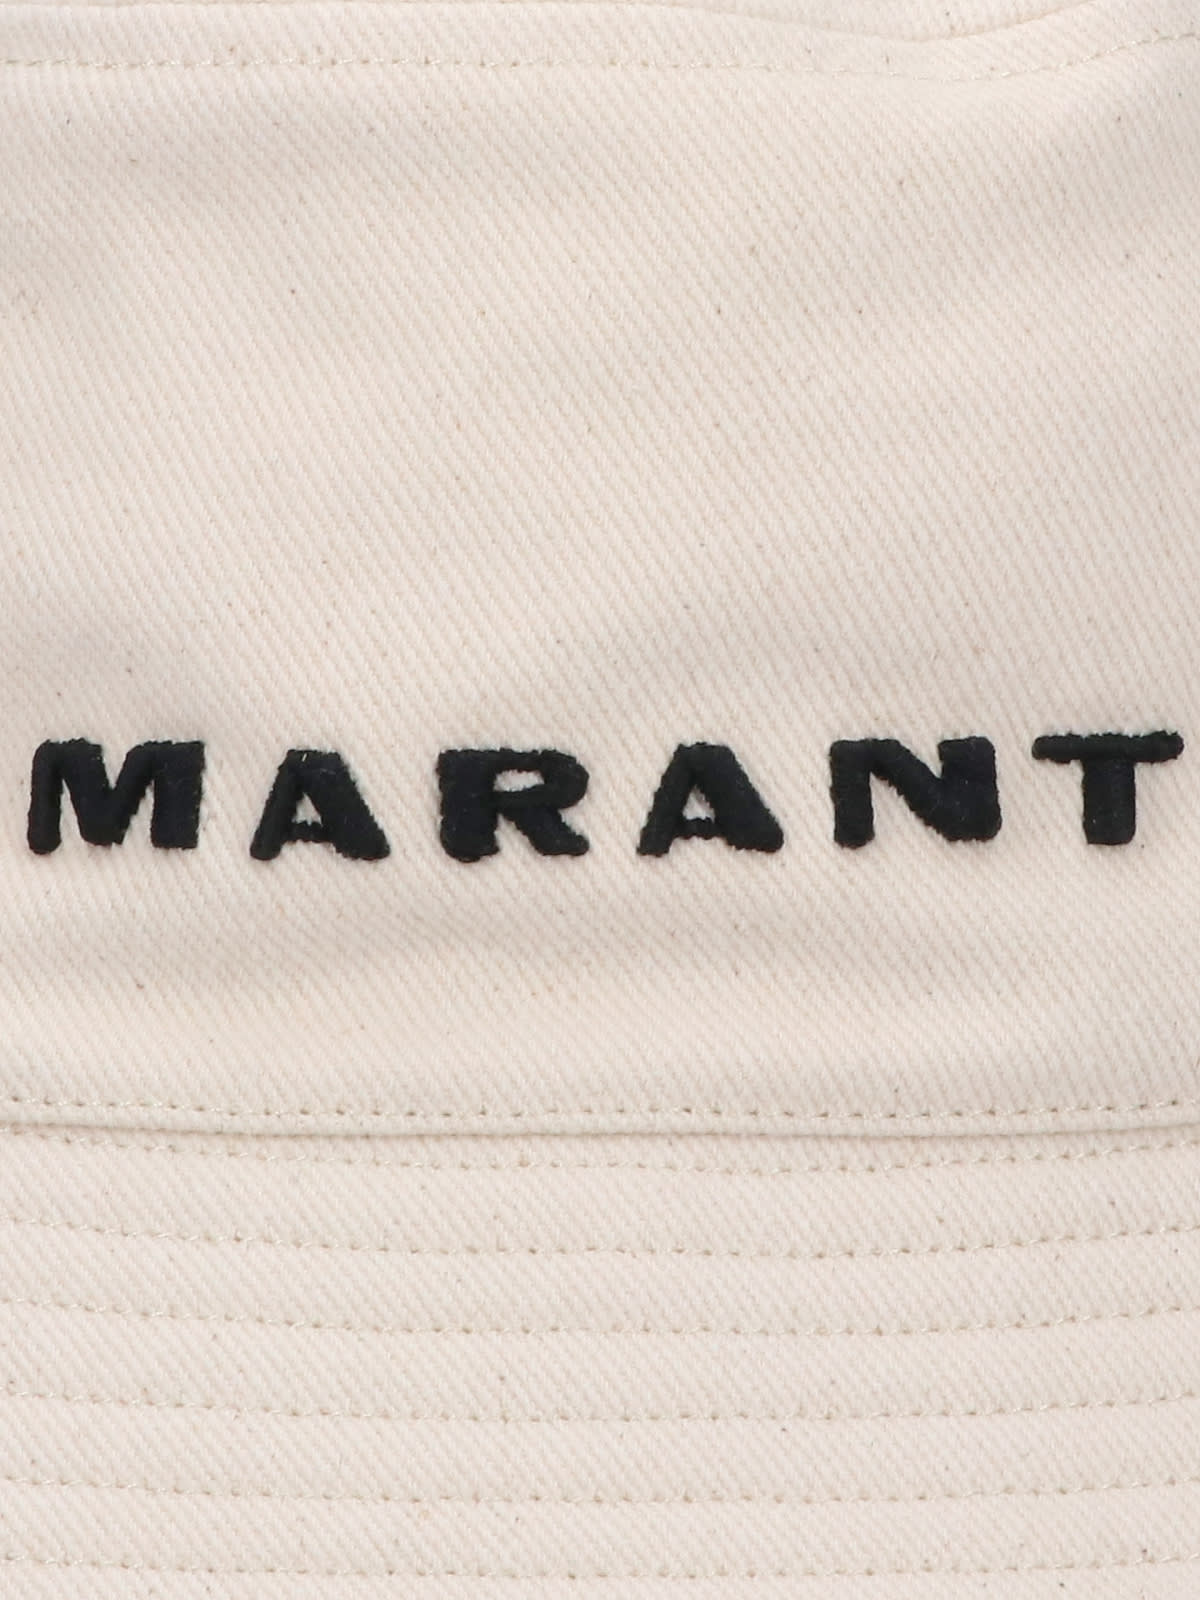 Shop Isabel Marant Haley Bucket Hat In Crema